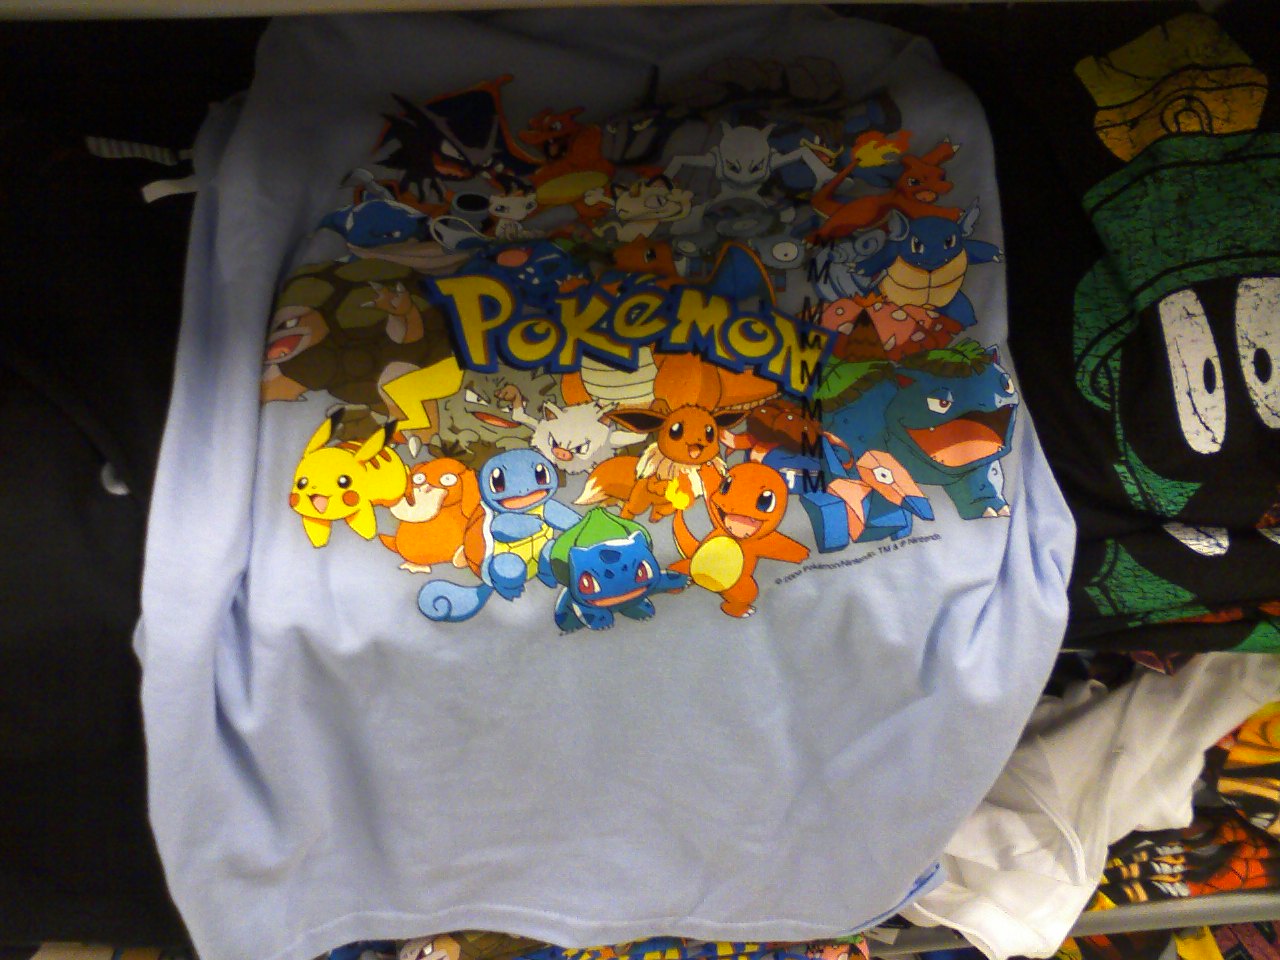 Pokemon Group T-Shirt at Kohls